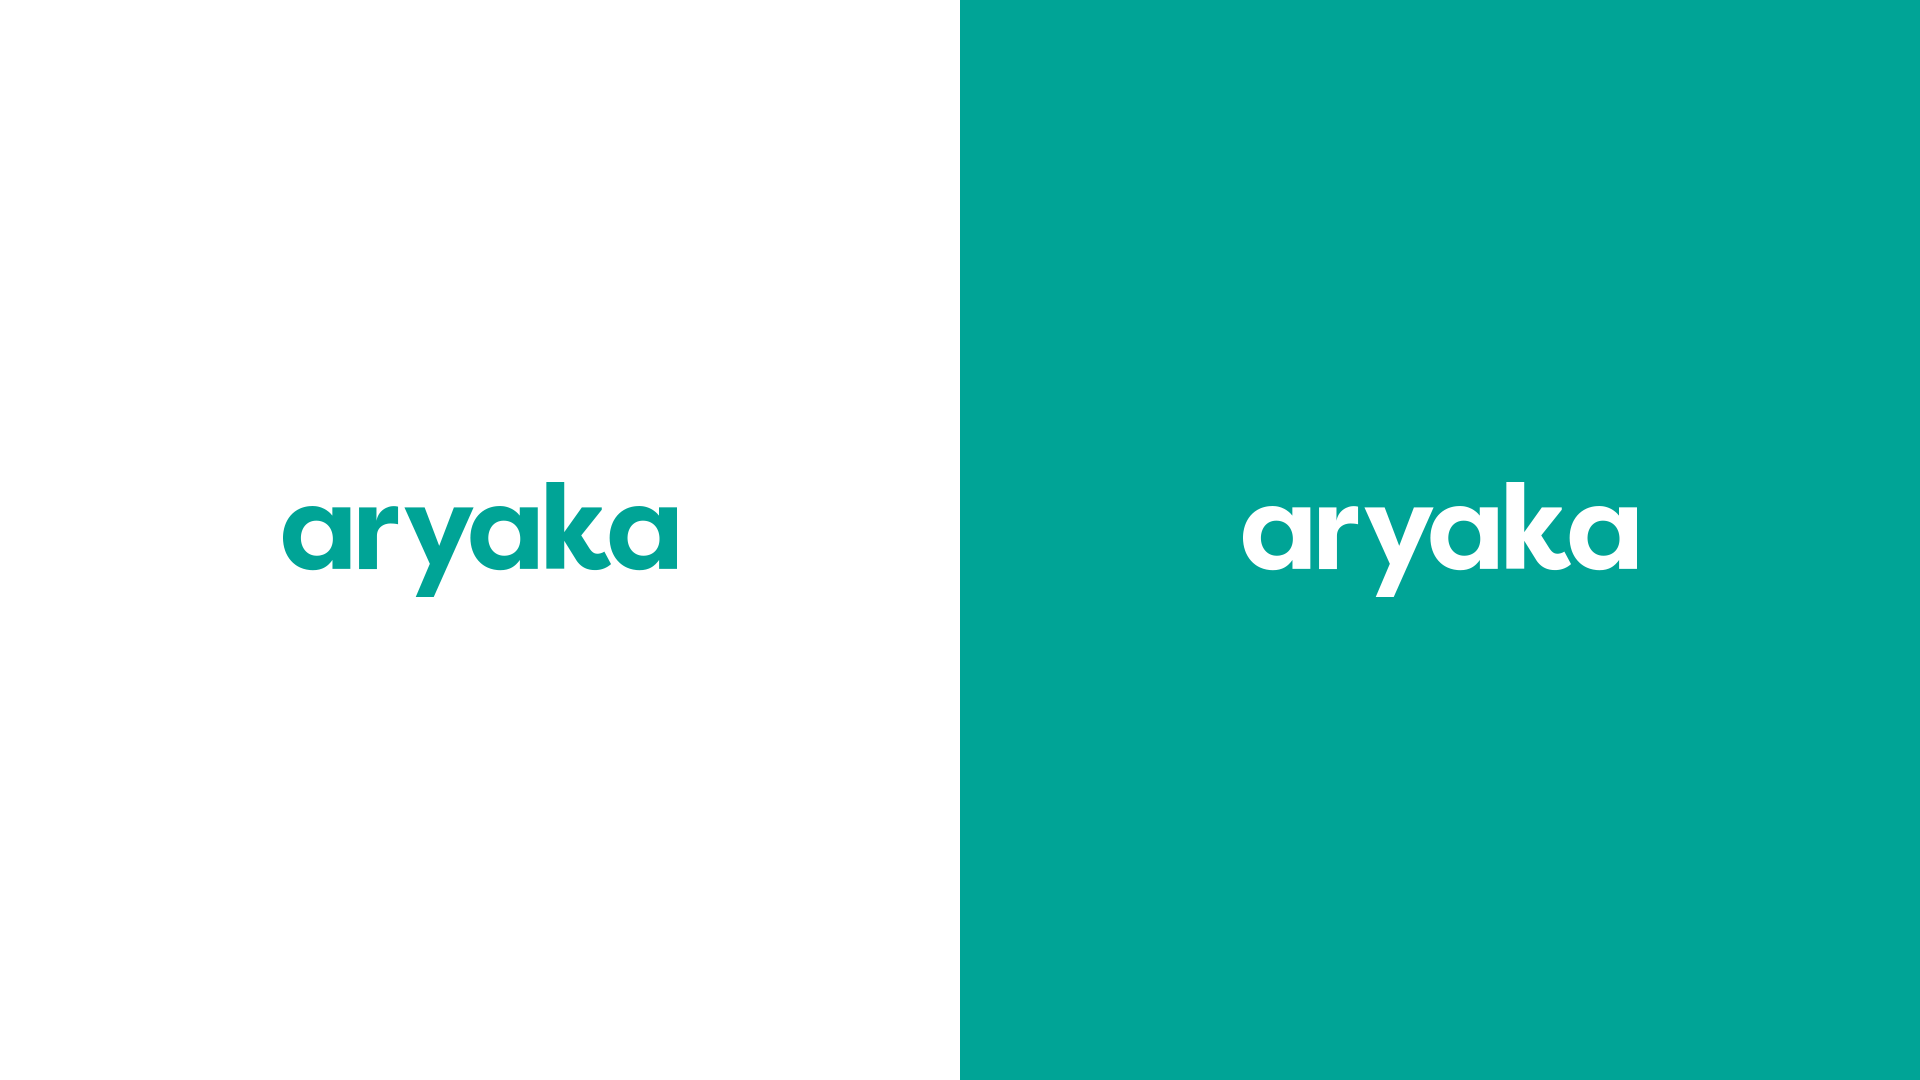 Aryaka Logo - Dribbble - aryaka-logo-full-spacetime.png by Caleb Sylvest